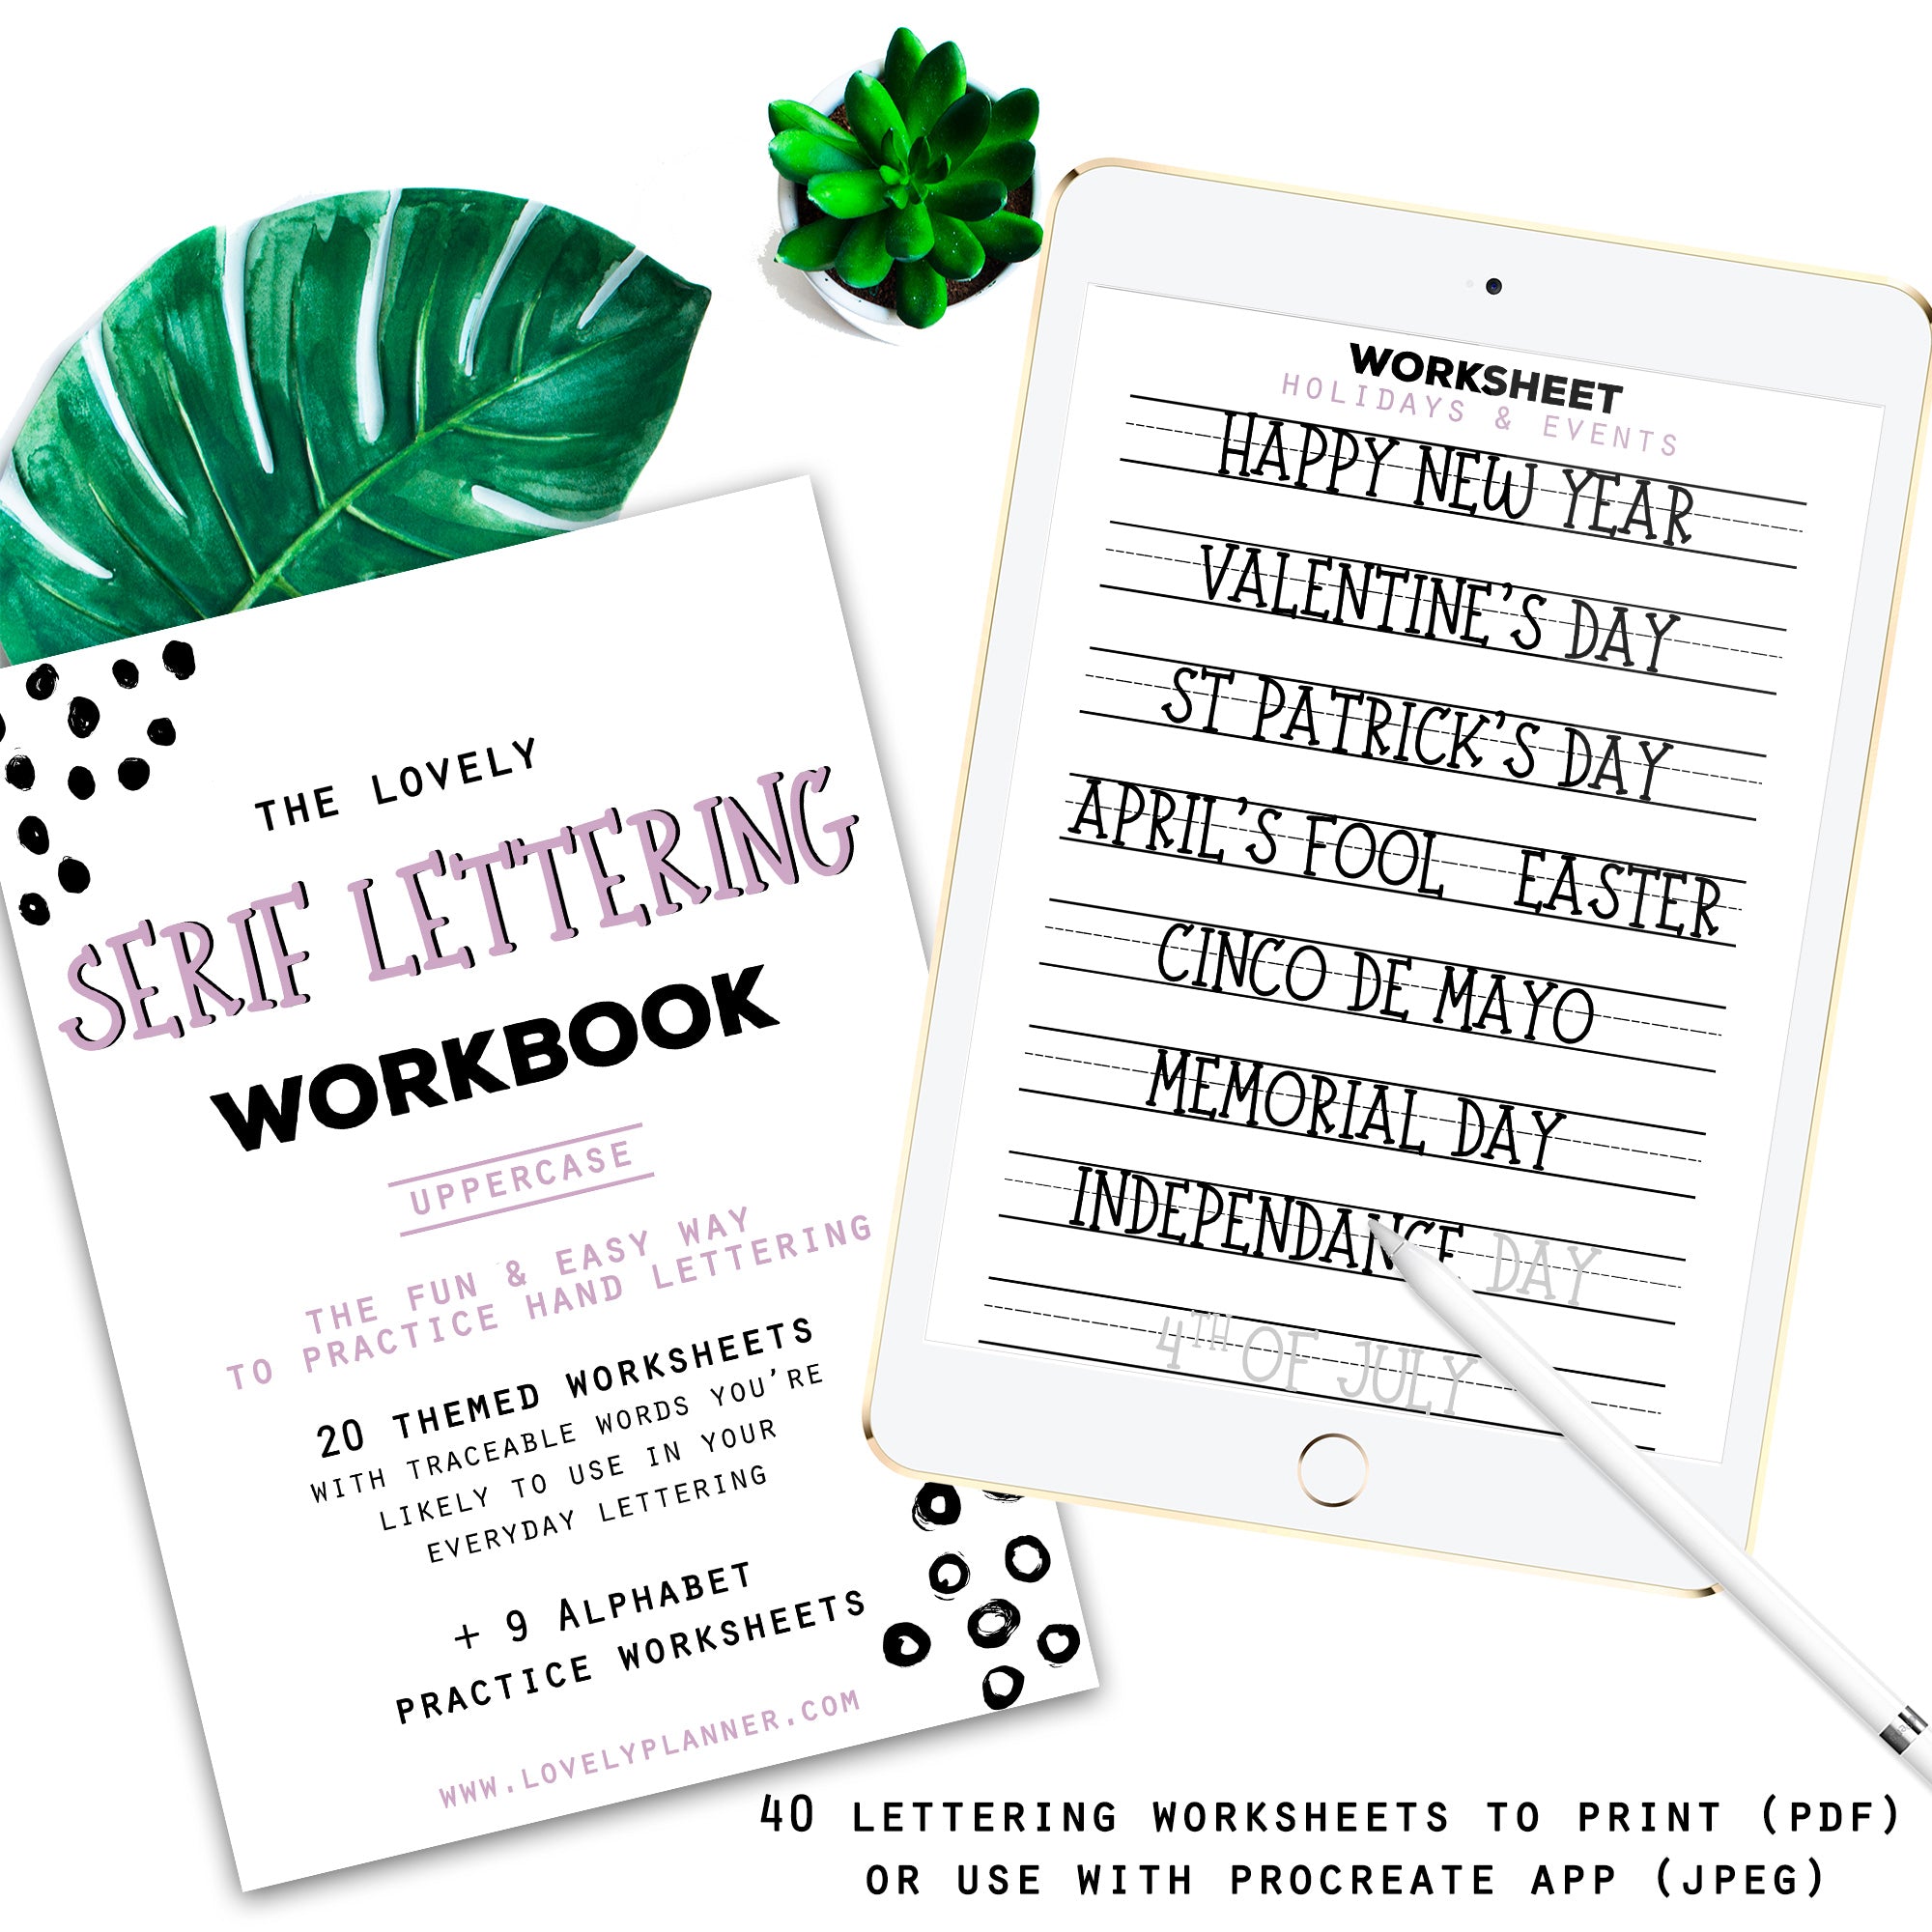 Serif Lettering (Caps) - 30 Practice Worksheets